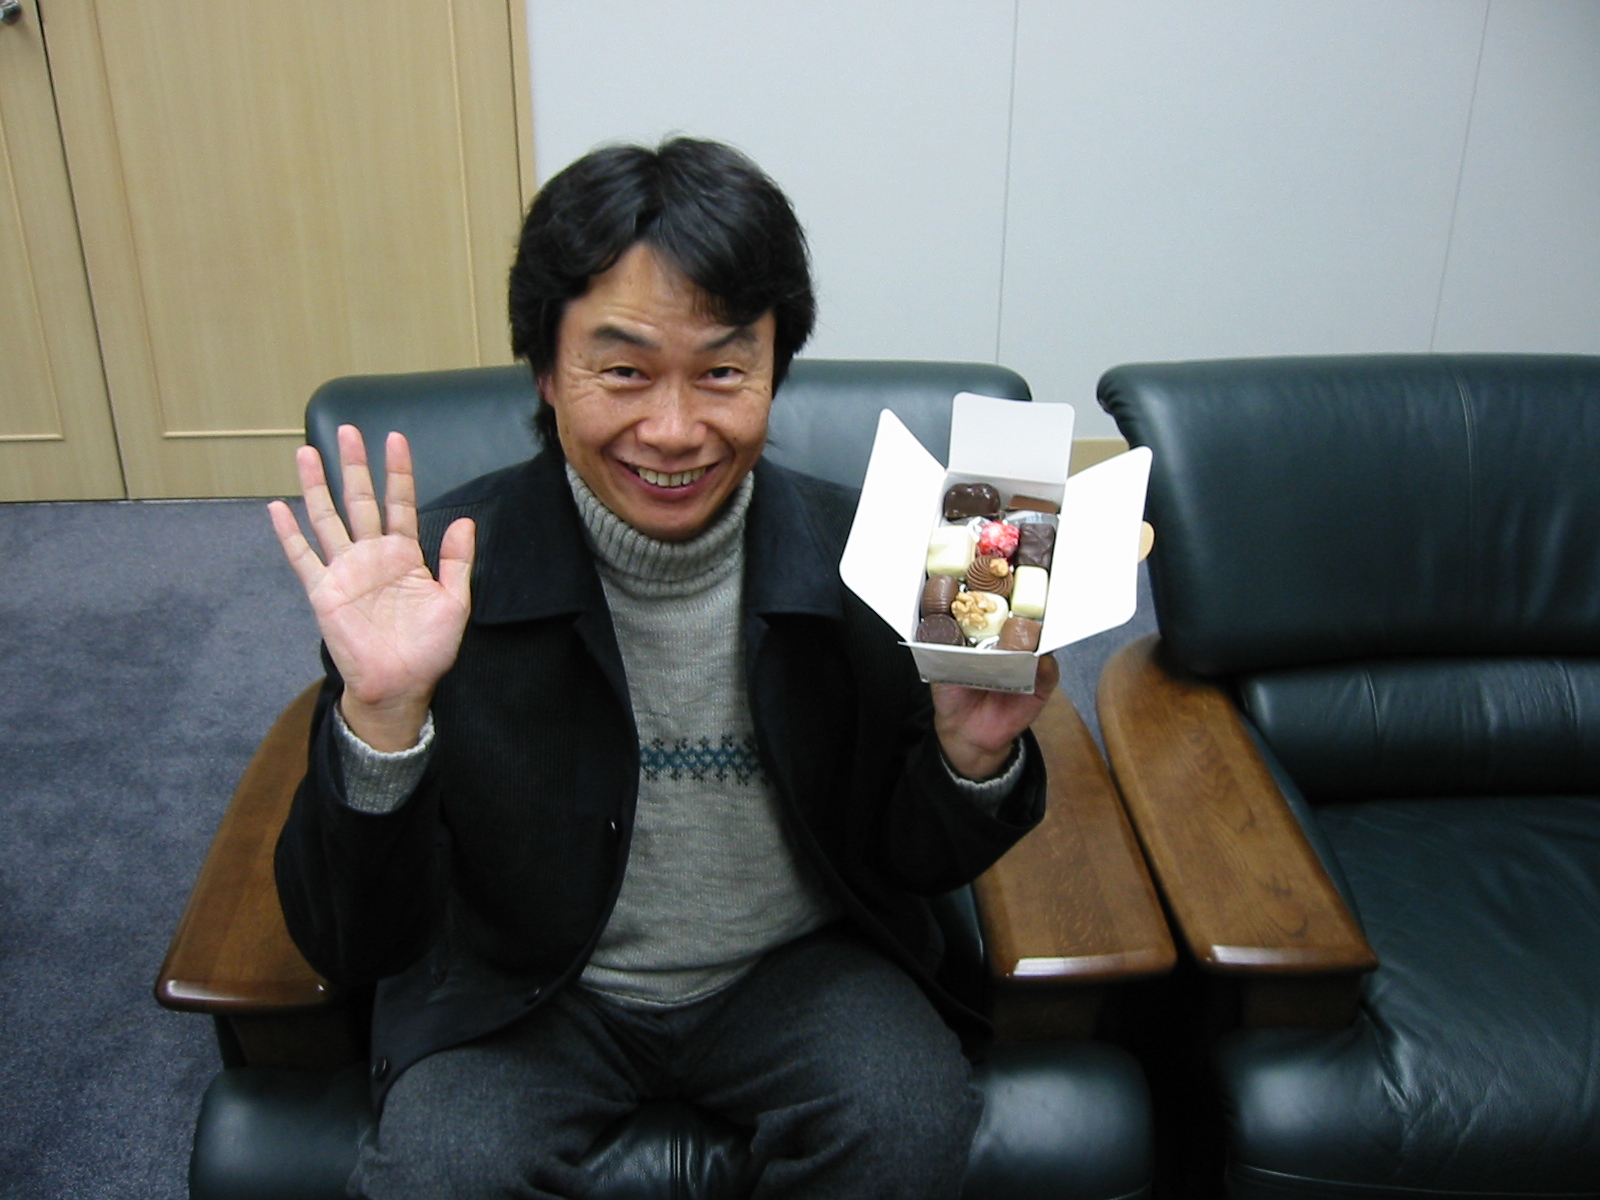 men, shigeru miyamoto